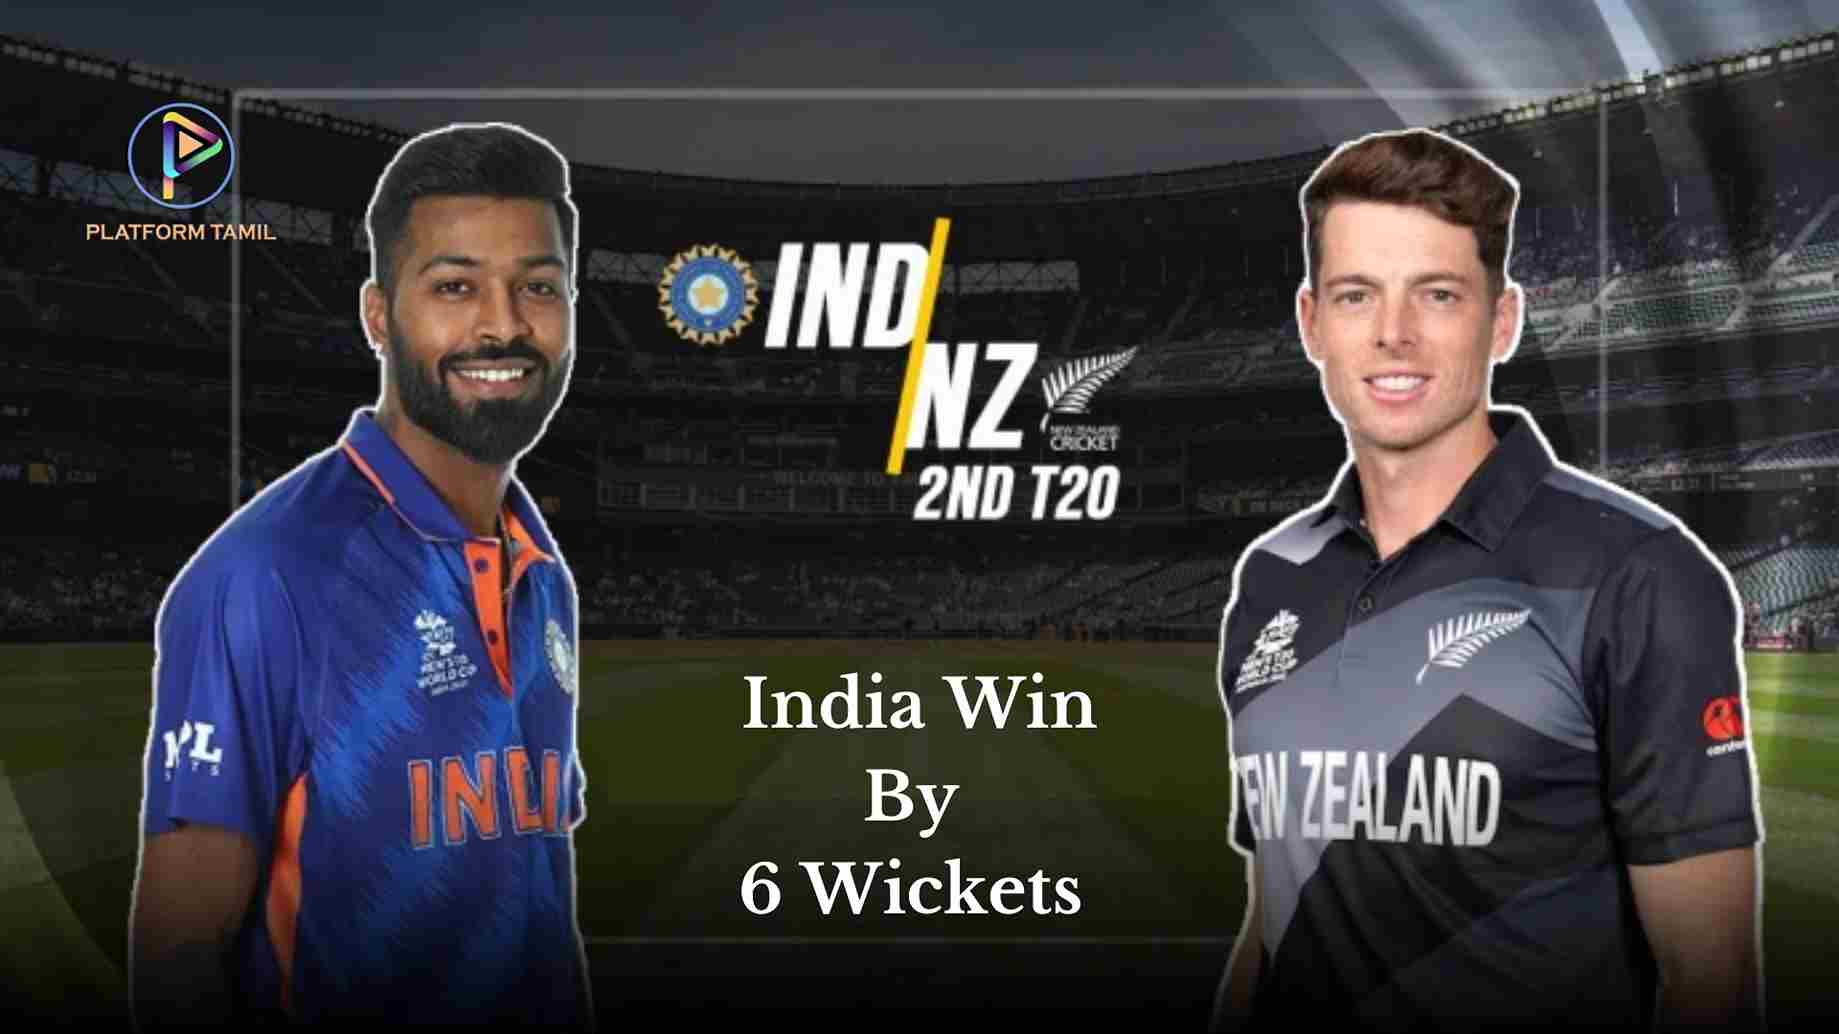 IND VS NZ 2nd T20 Highlights - Platform Tamil